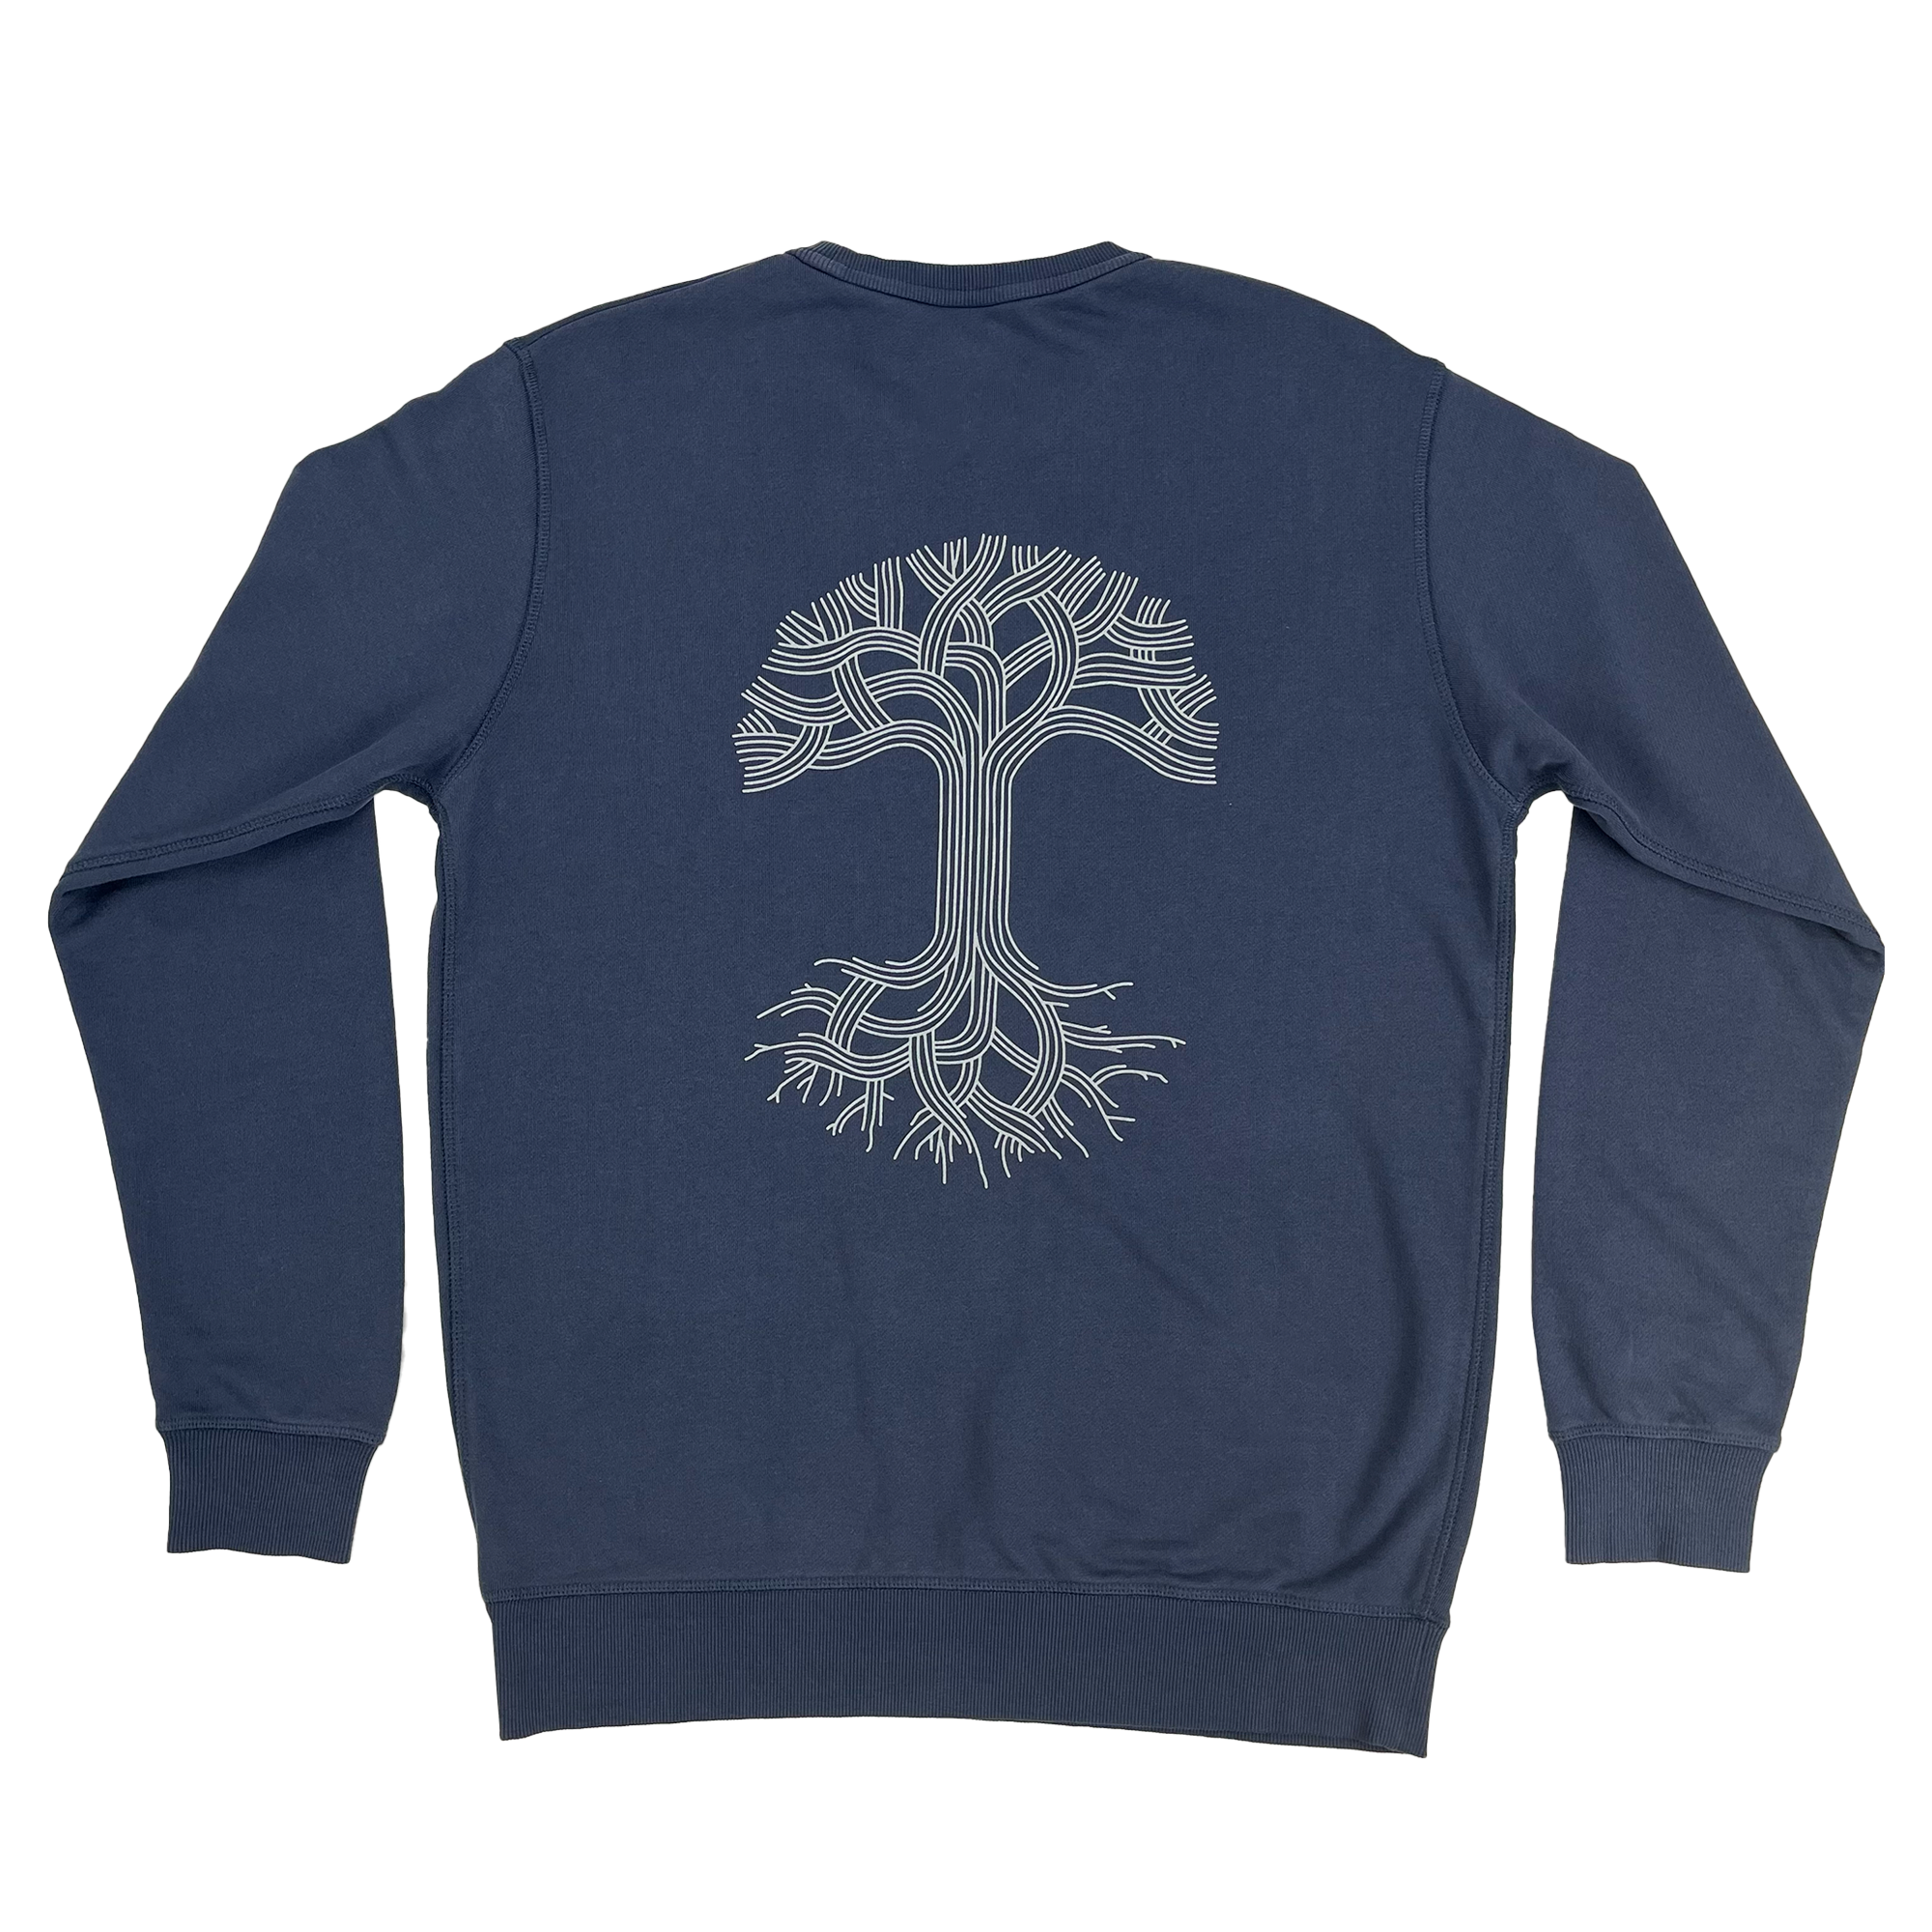 Back view of Premium crewneck sweatshirt - Oaklandish tree logo, Petrol Blue